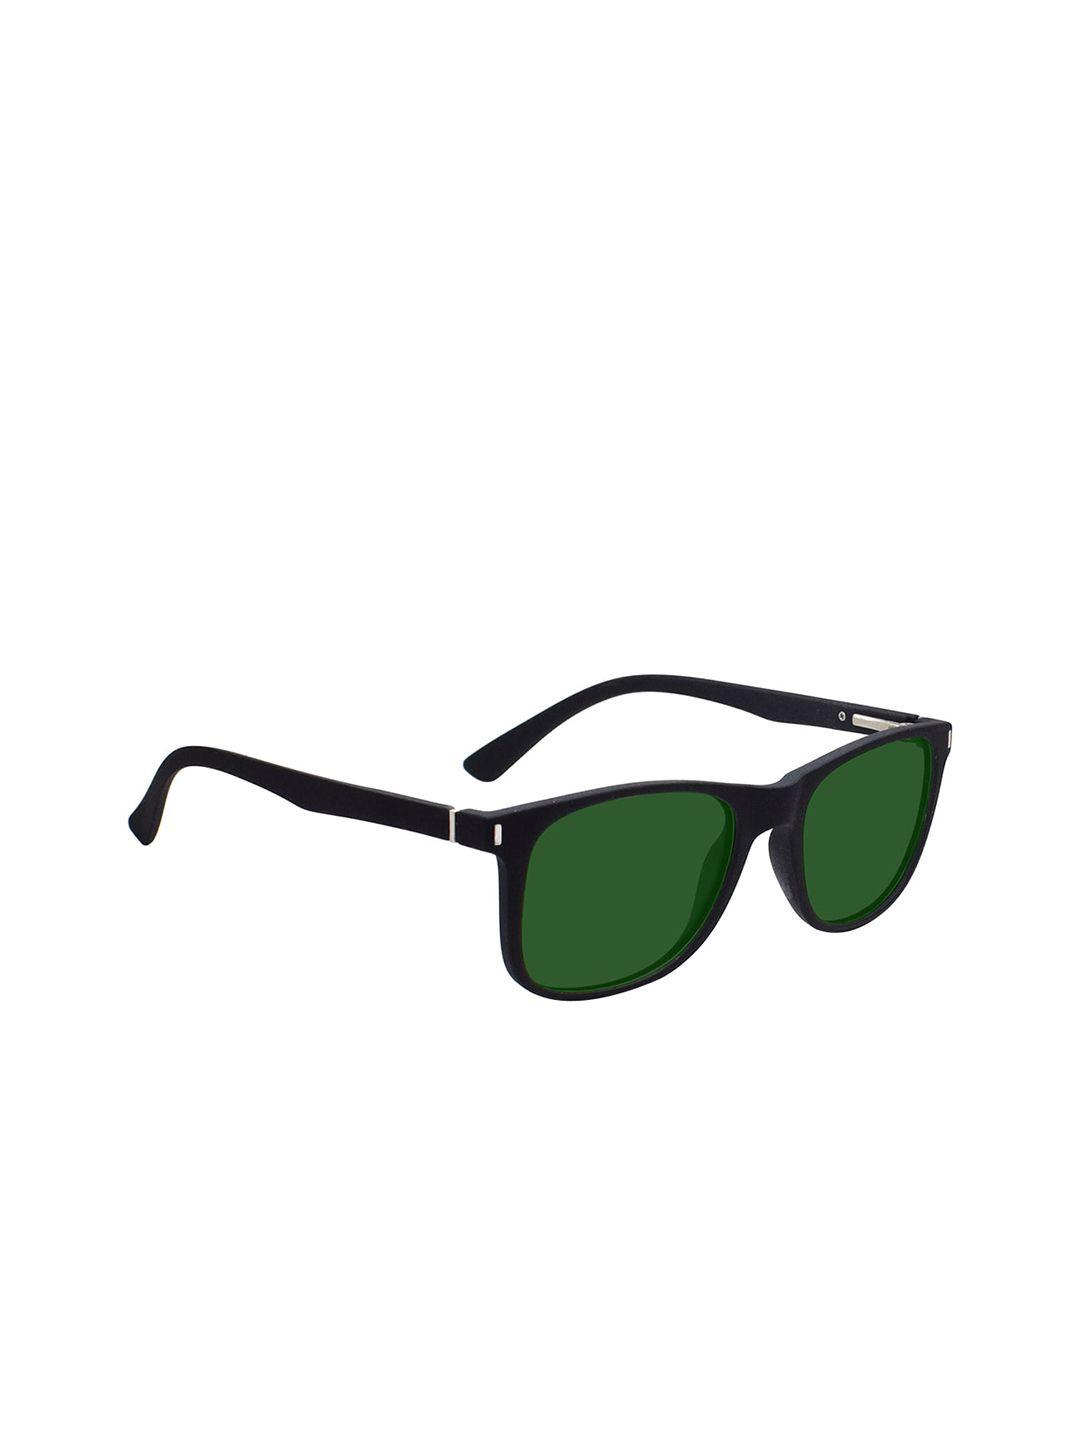 peter jones eyewear unisex green lens & black square sunglasses with uv protected lens